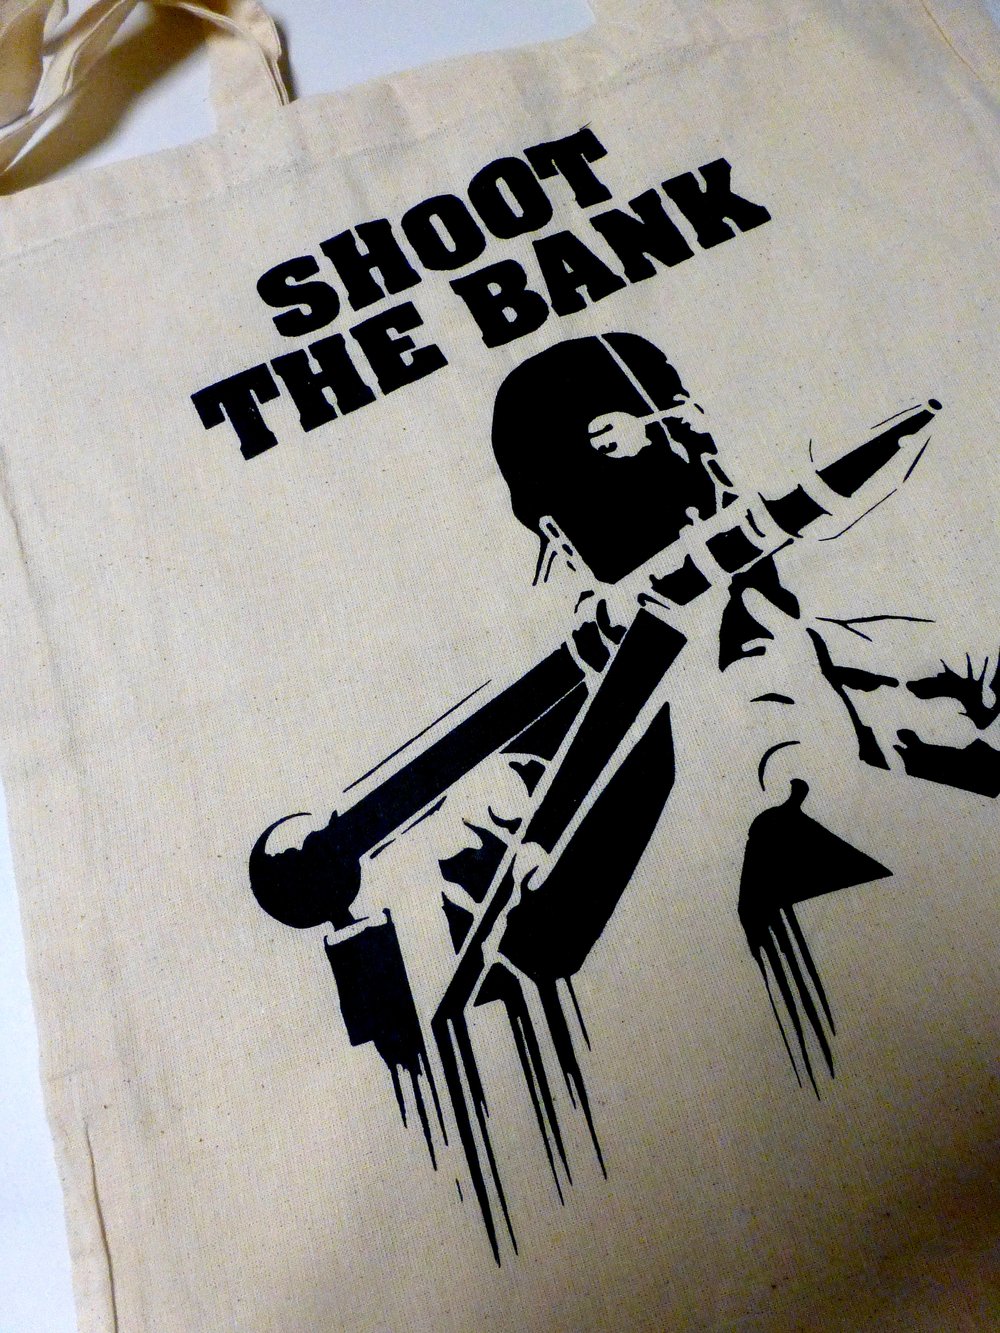 TOTE BAG SHOOT THE BANK